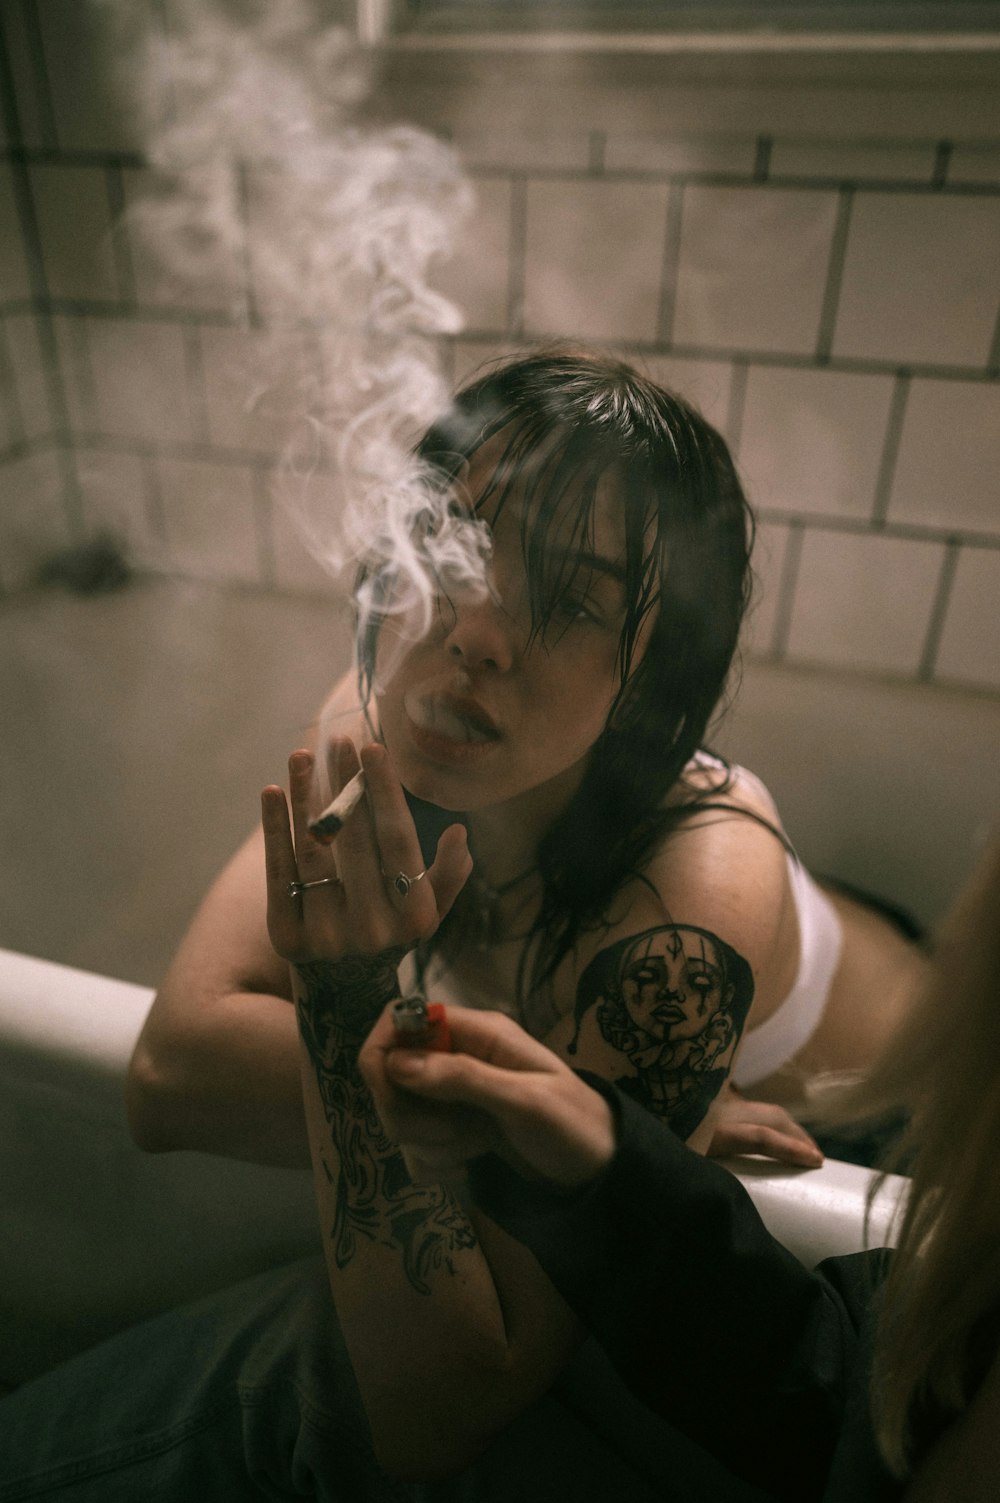 a woman smoking a cigarette in a bathroom